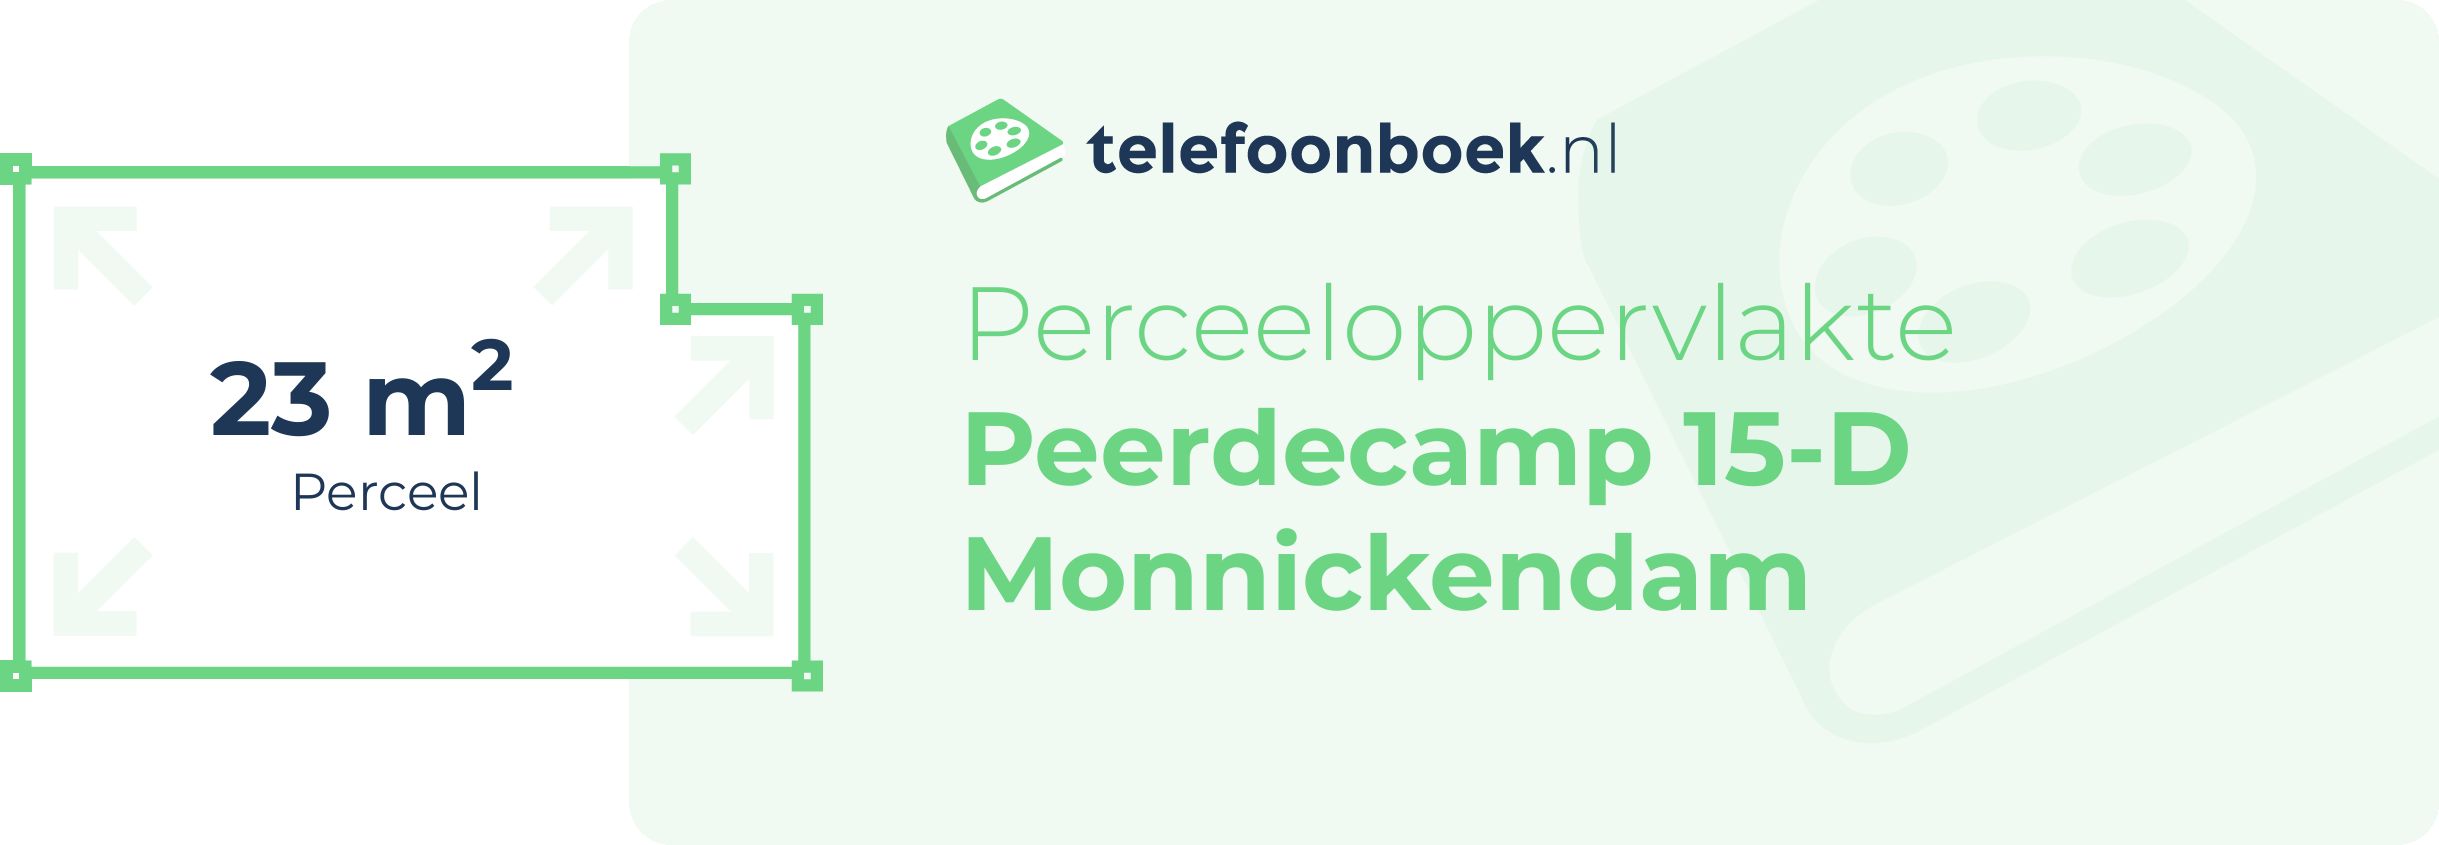 Perceeloppervlakte Peerdecamp 15-D Monnickendam